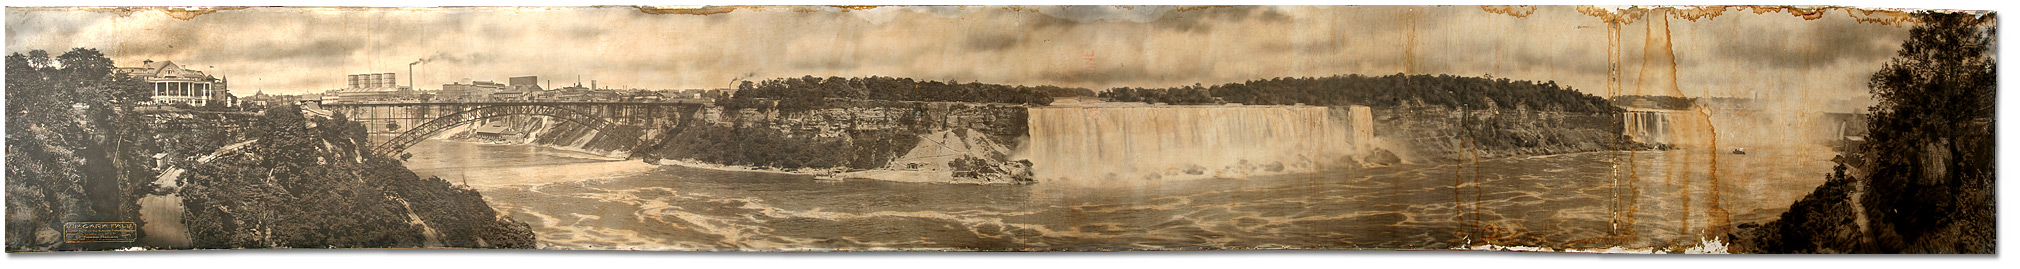 Photographie : Wm. Thomson Panoramas de Freelands - Niagara Falls Summer Panorama